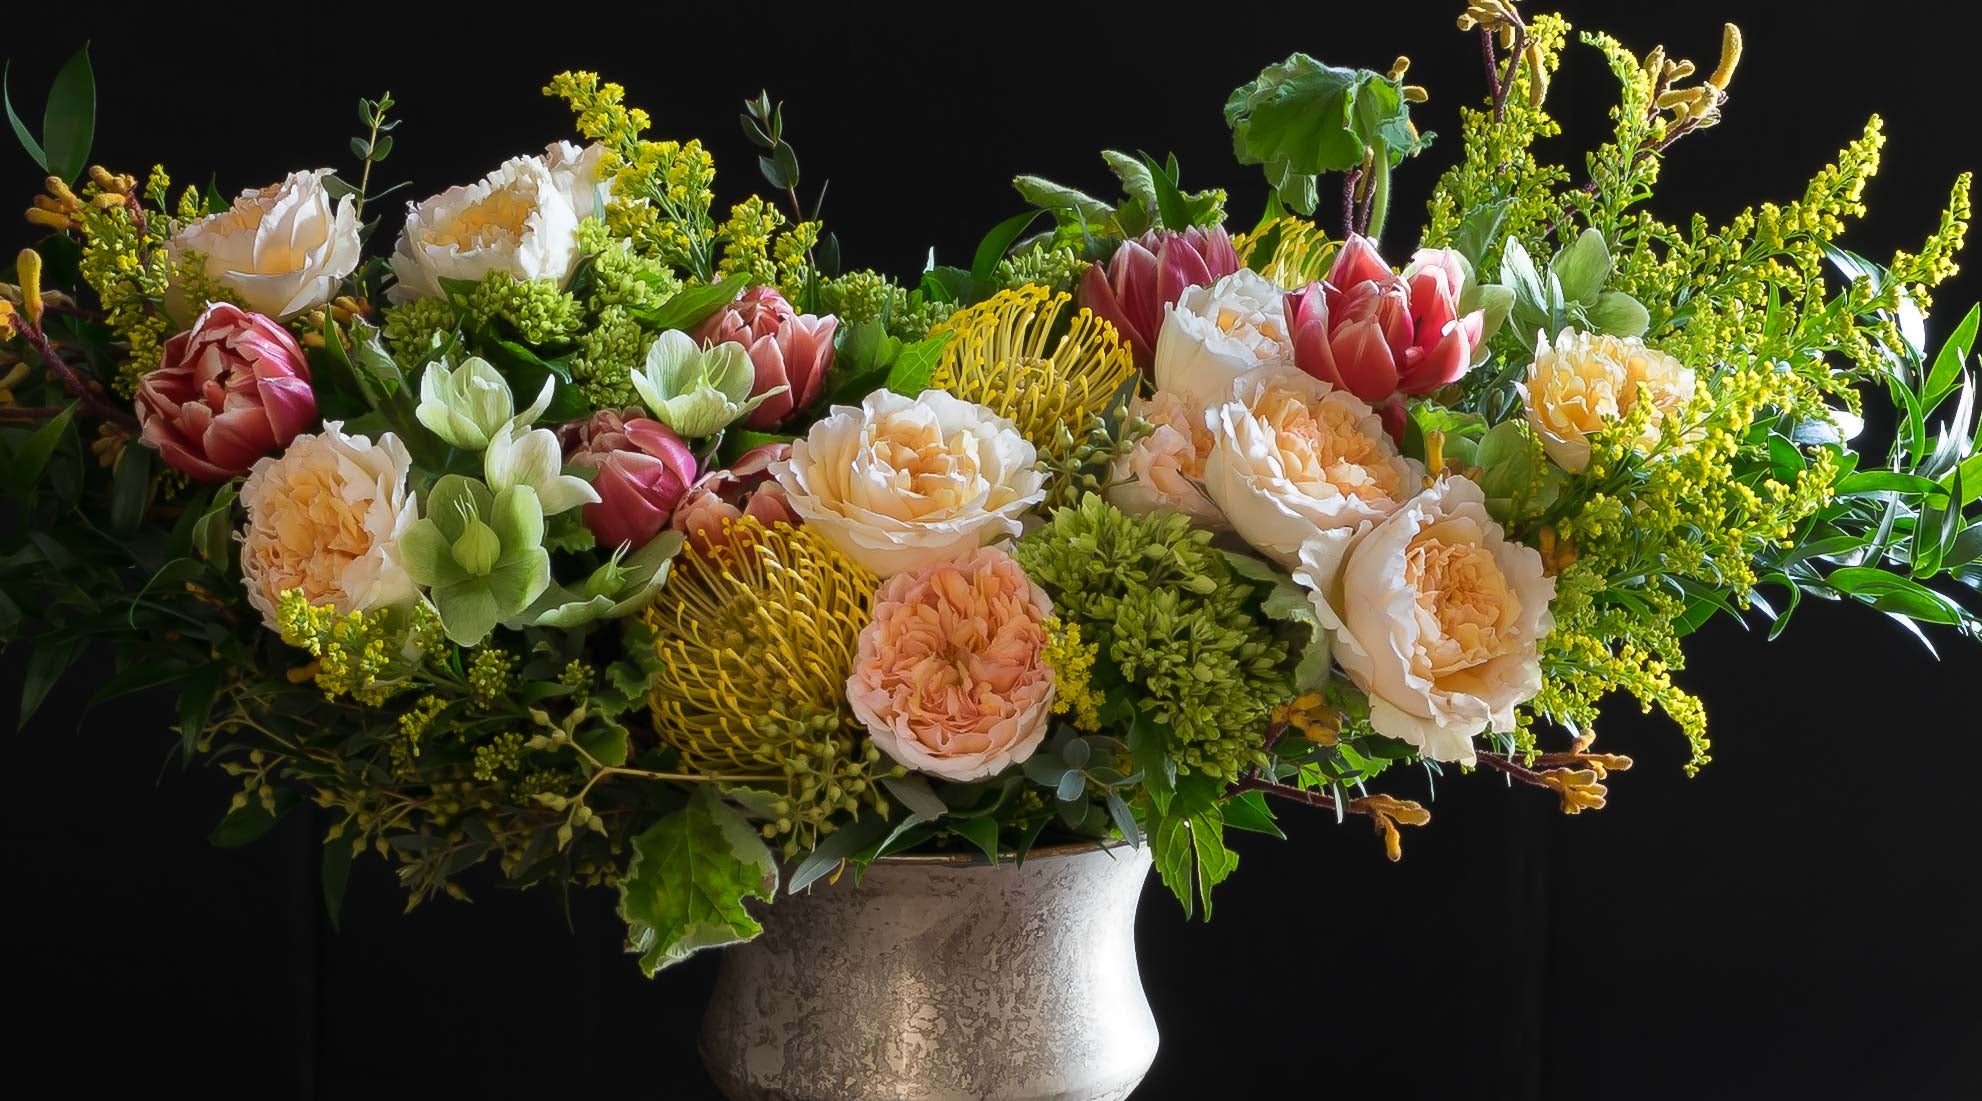 Colorful luxury boutique floral arrangement using the best premium flowers - blush, red, yellow, orange,  flowers